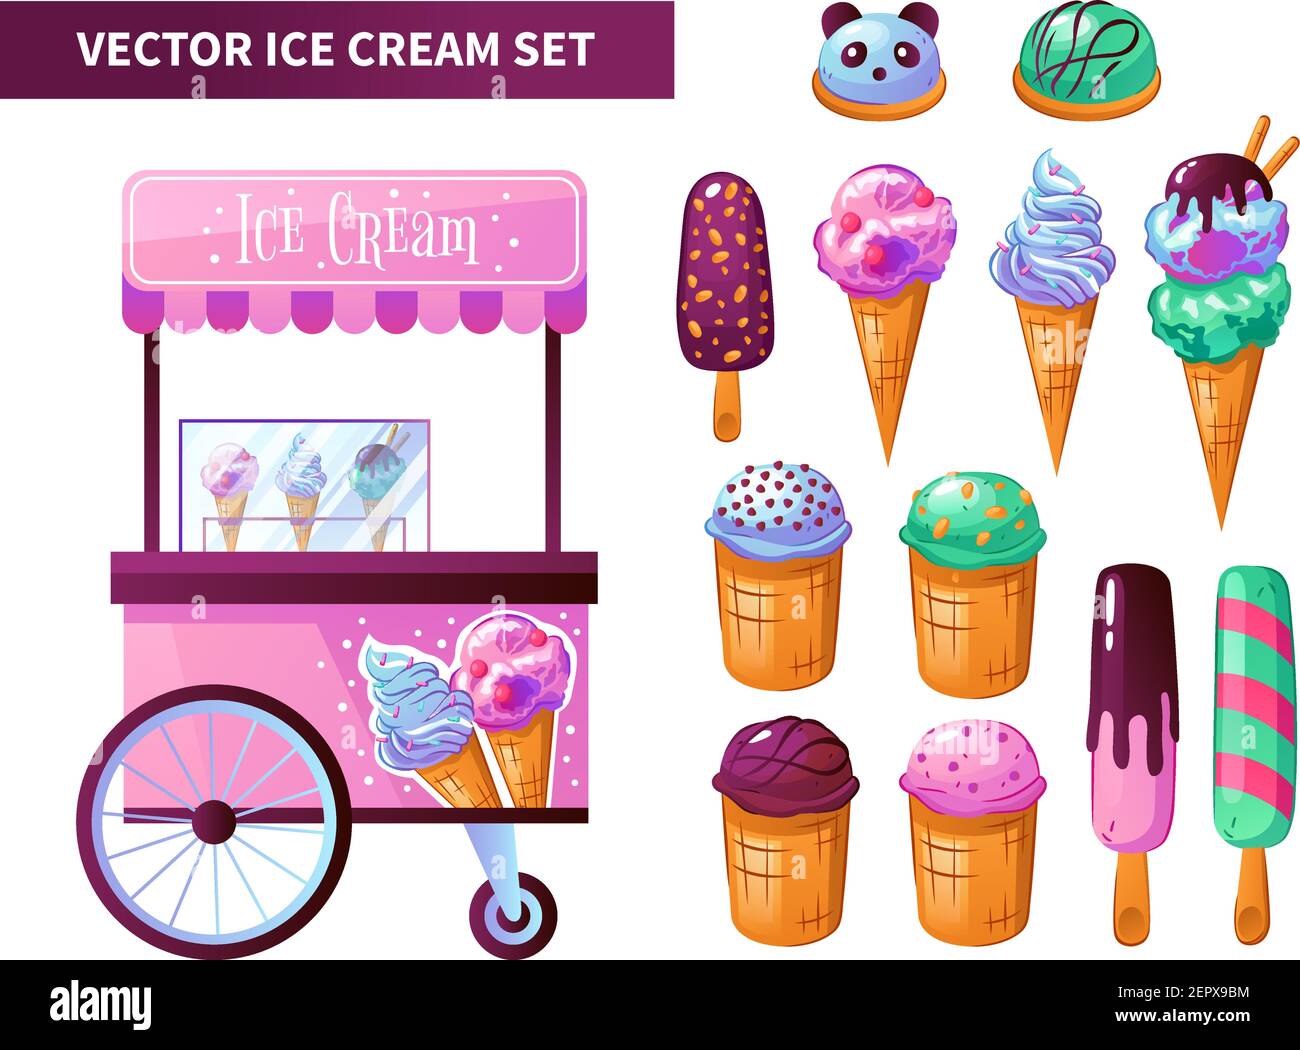 Ice cream cart products set with chocolate vanilla frozen yogurt snacks bar waffle cones isolated vector illustration Stock Vector